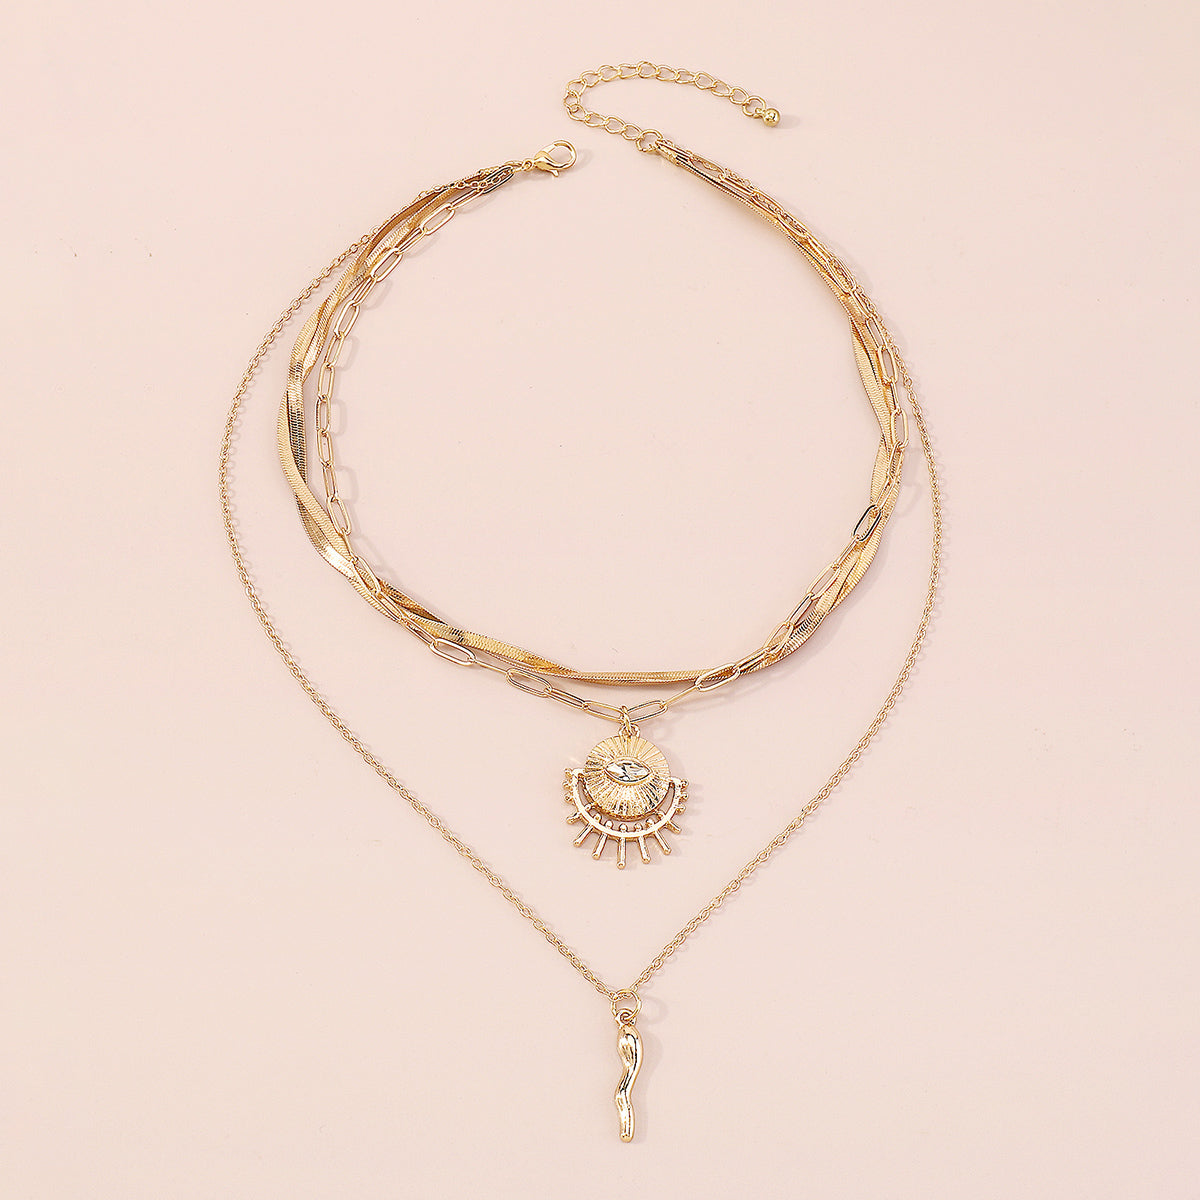 Punk Twist Snake Chain Eye Pendant Necklace medyjewelry